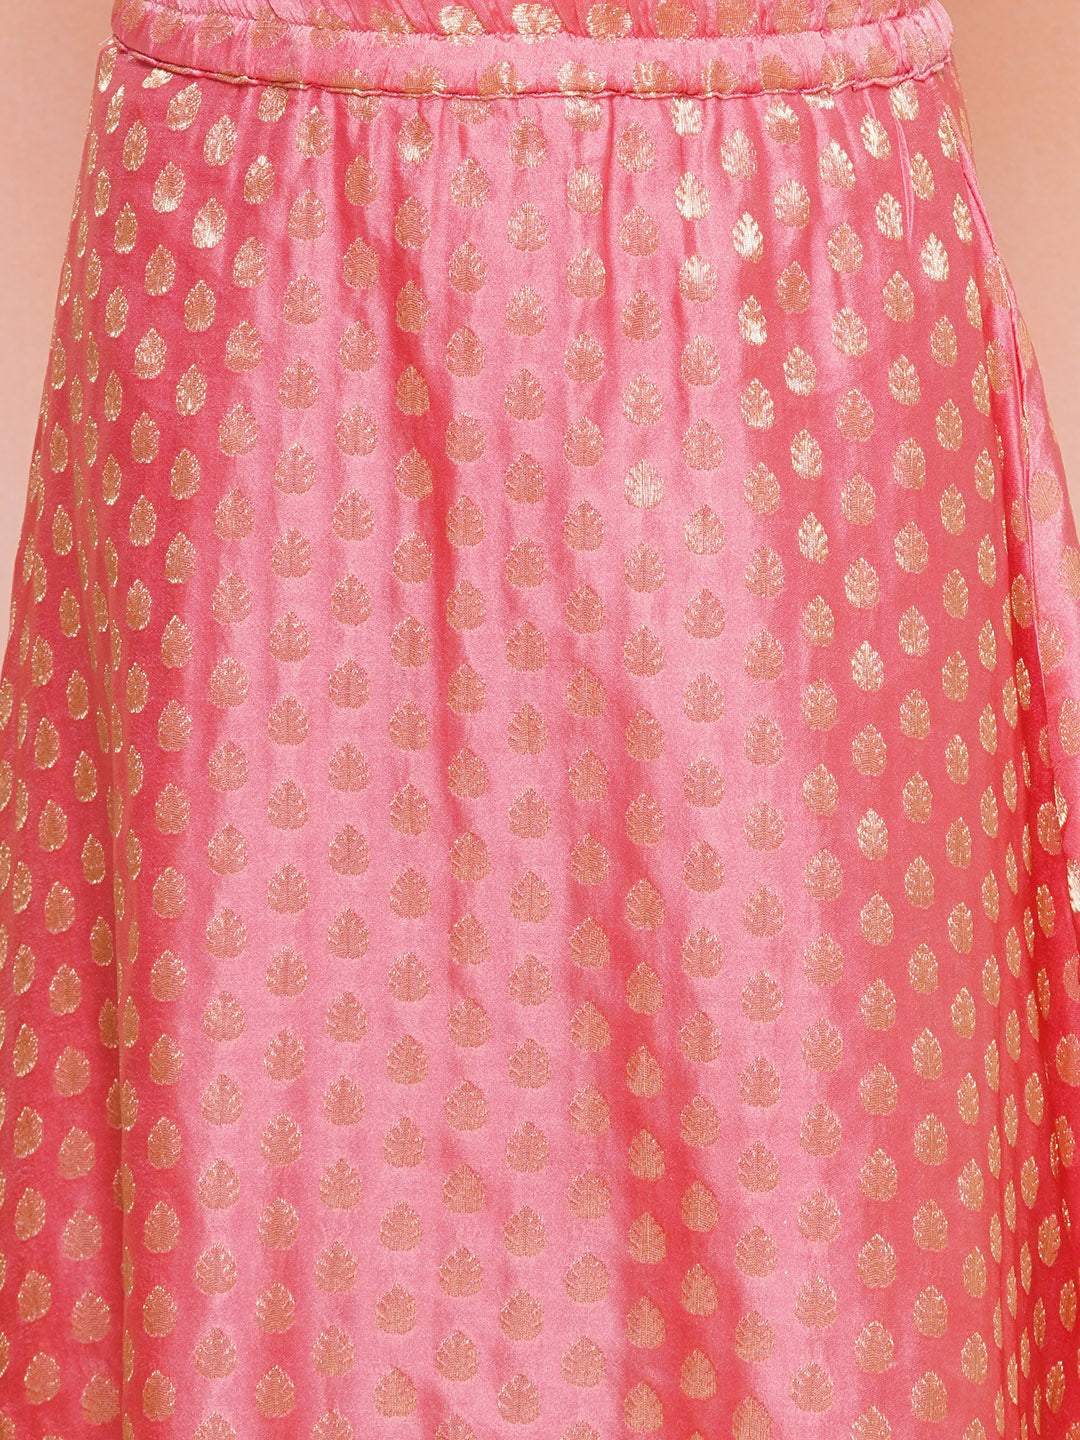 Girls Jacquard Brasso Print 3/4 th Sleeve Pink Lehenga Choli Set